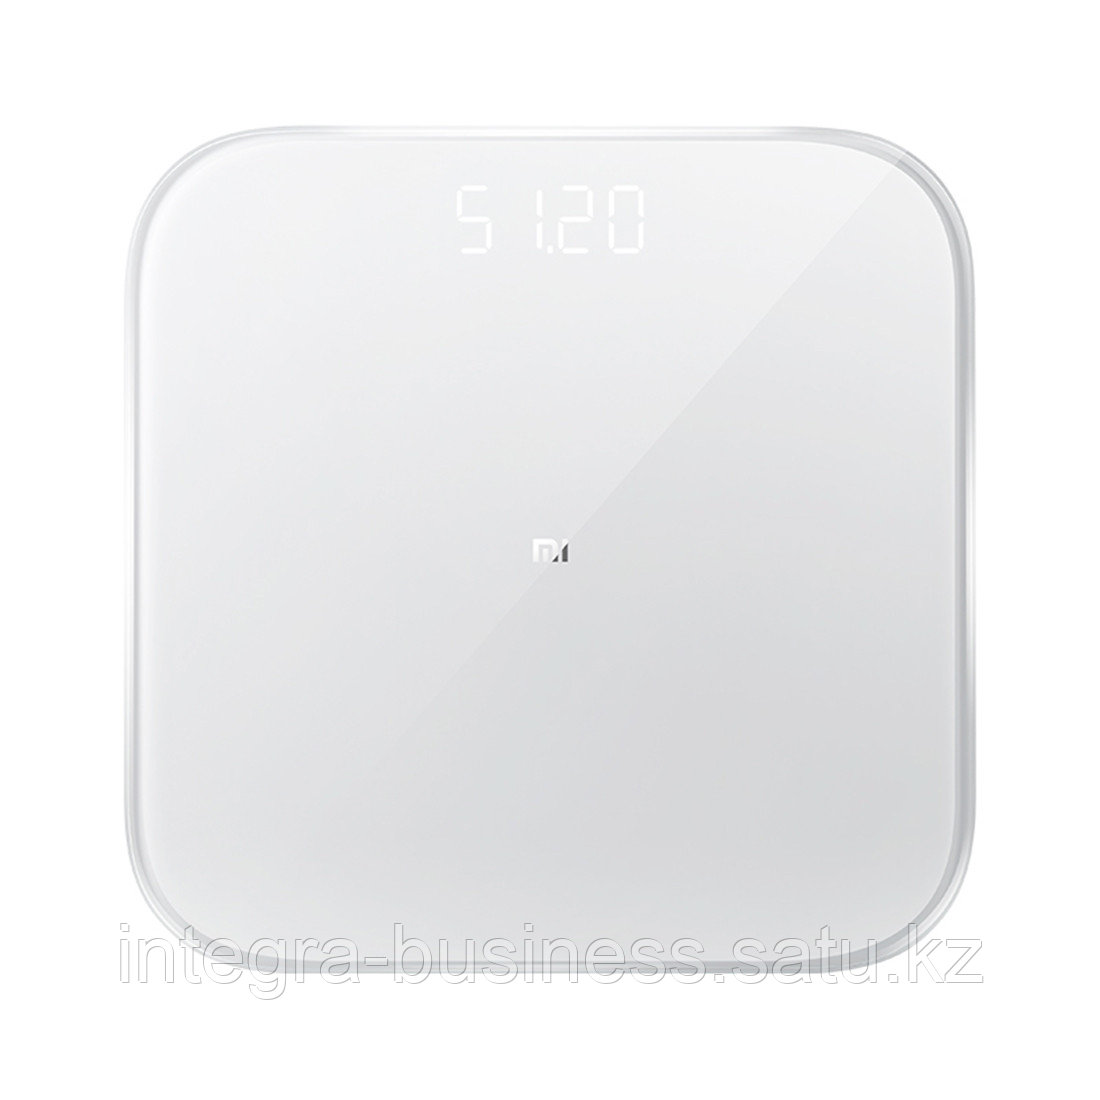 Весы Xiaomi Mi Smart Scale 2, фото 1